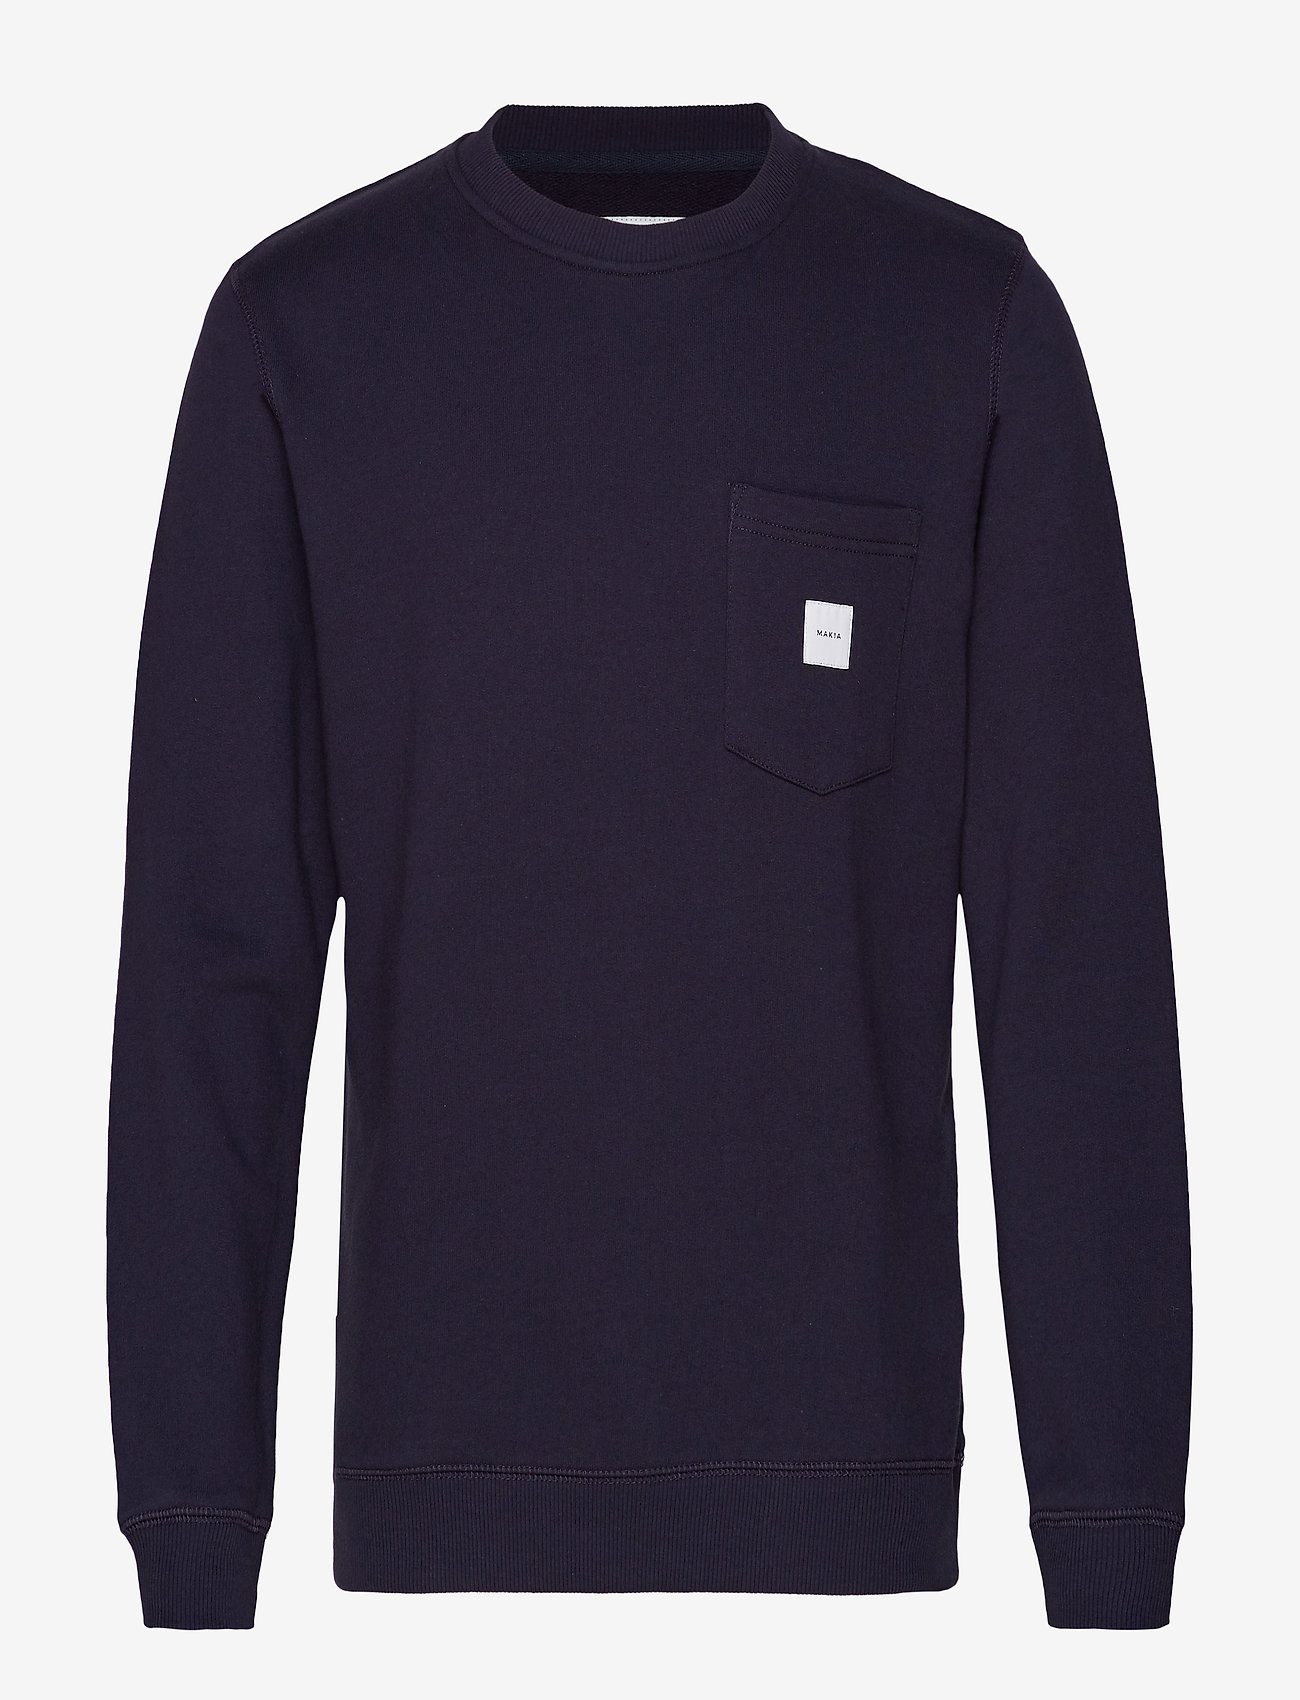 Makia - Square Pocket Sweatshirt - svetarit - dark blue - 0